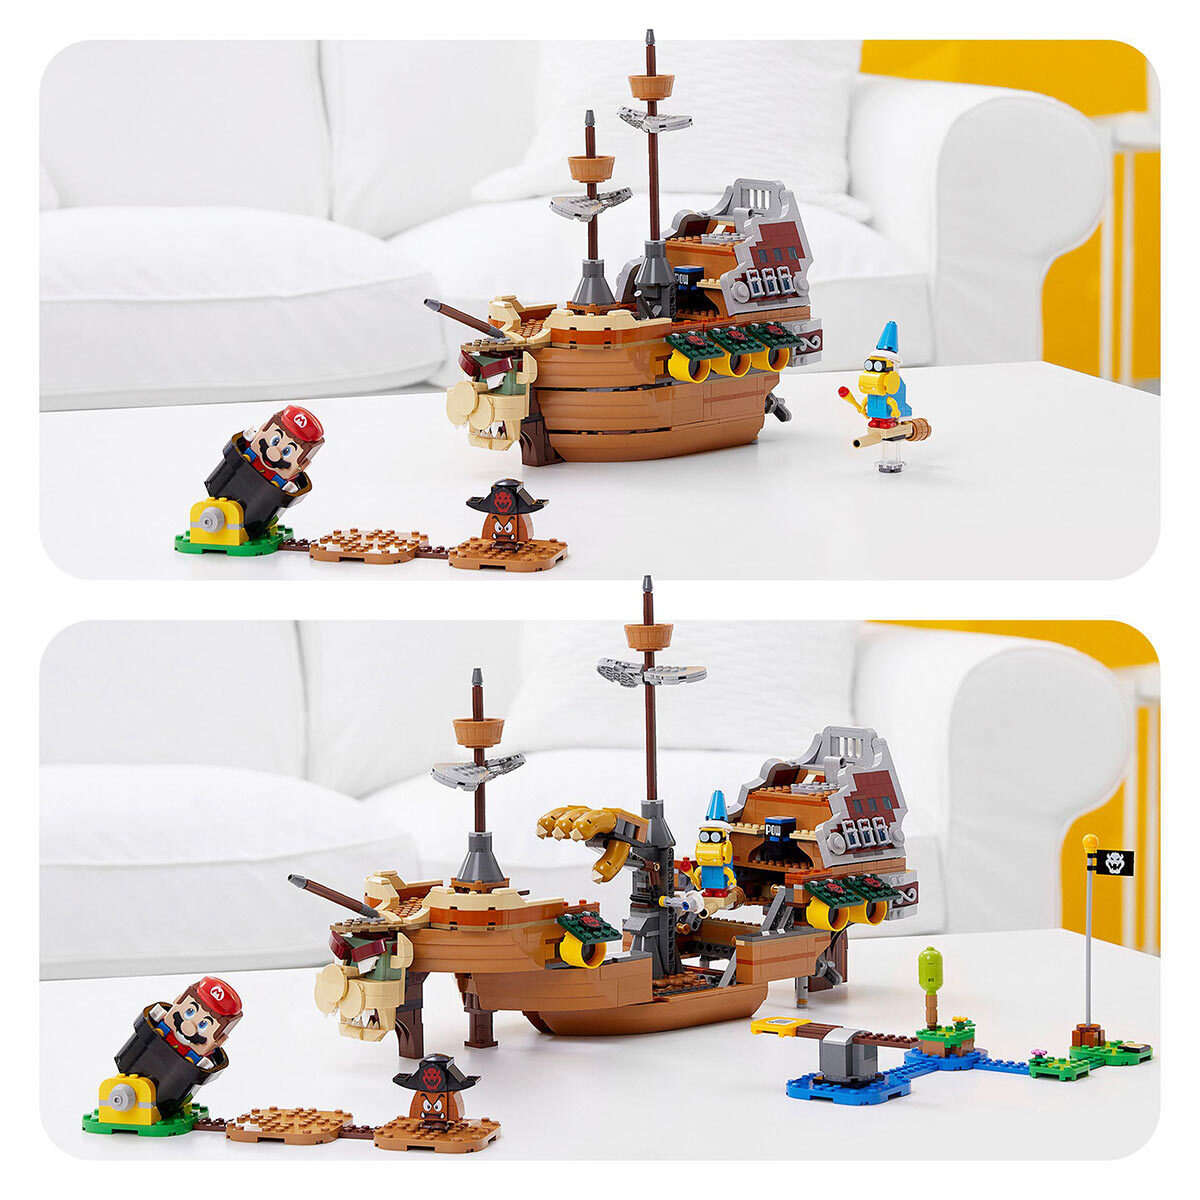 Buy LEGO Super Mario Bowser's Airship Expansion Set Details Image at Costco.co.uk